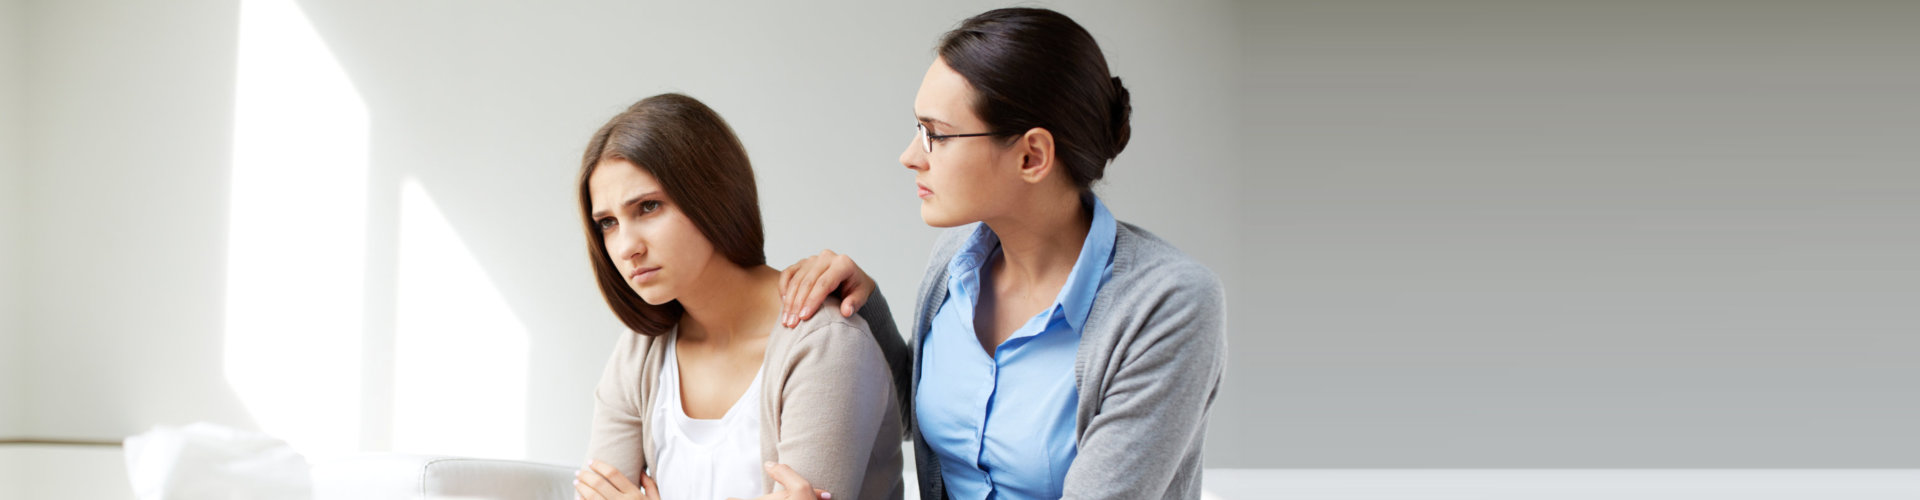 young psychiatrist comforting depressed woman